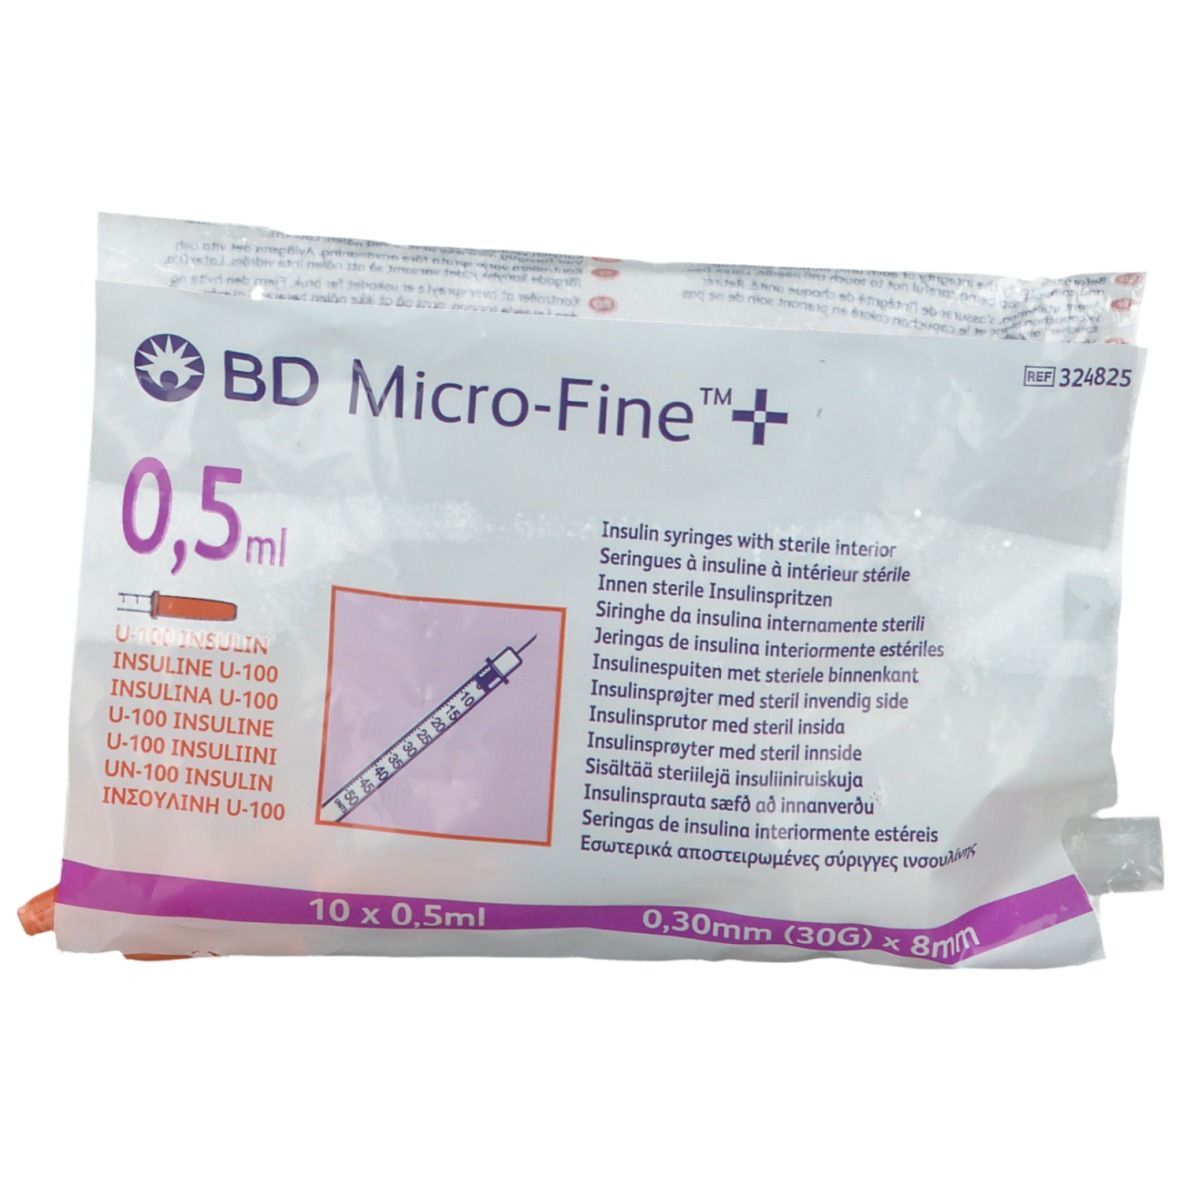 Image of BD Micro-Fine™ 30 G 0,30 x 8 mm 0,5 ml + U-100 Insulin Innen sterile Insulinspritze